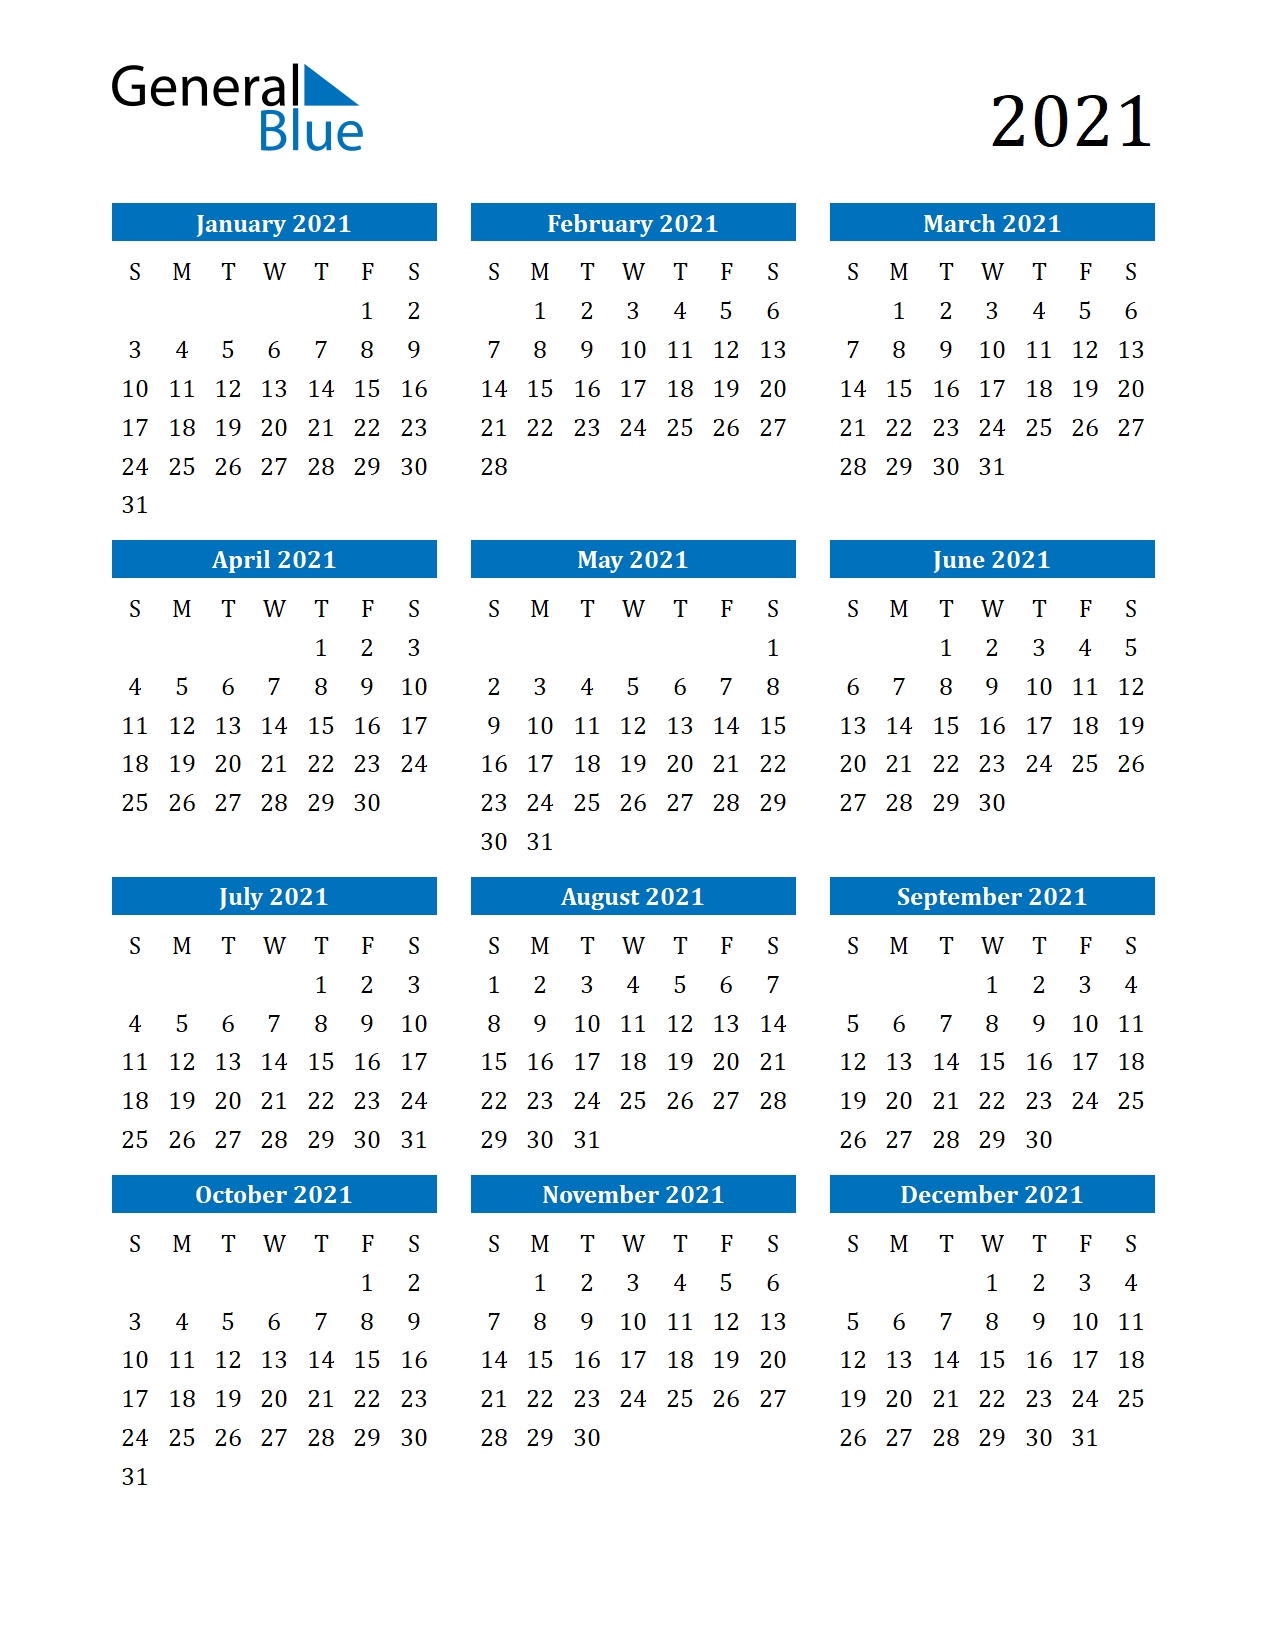 Take 2021 Weekly Calendar